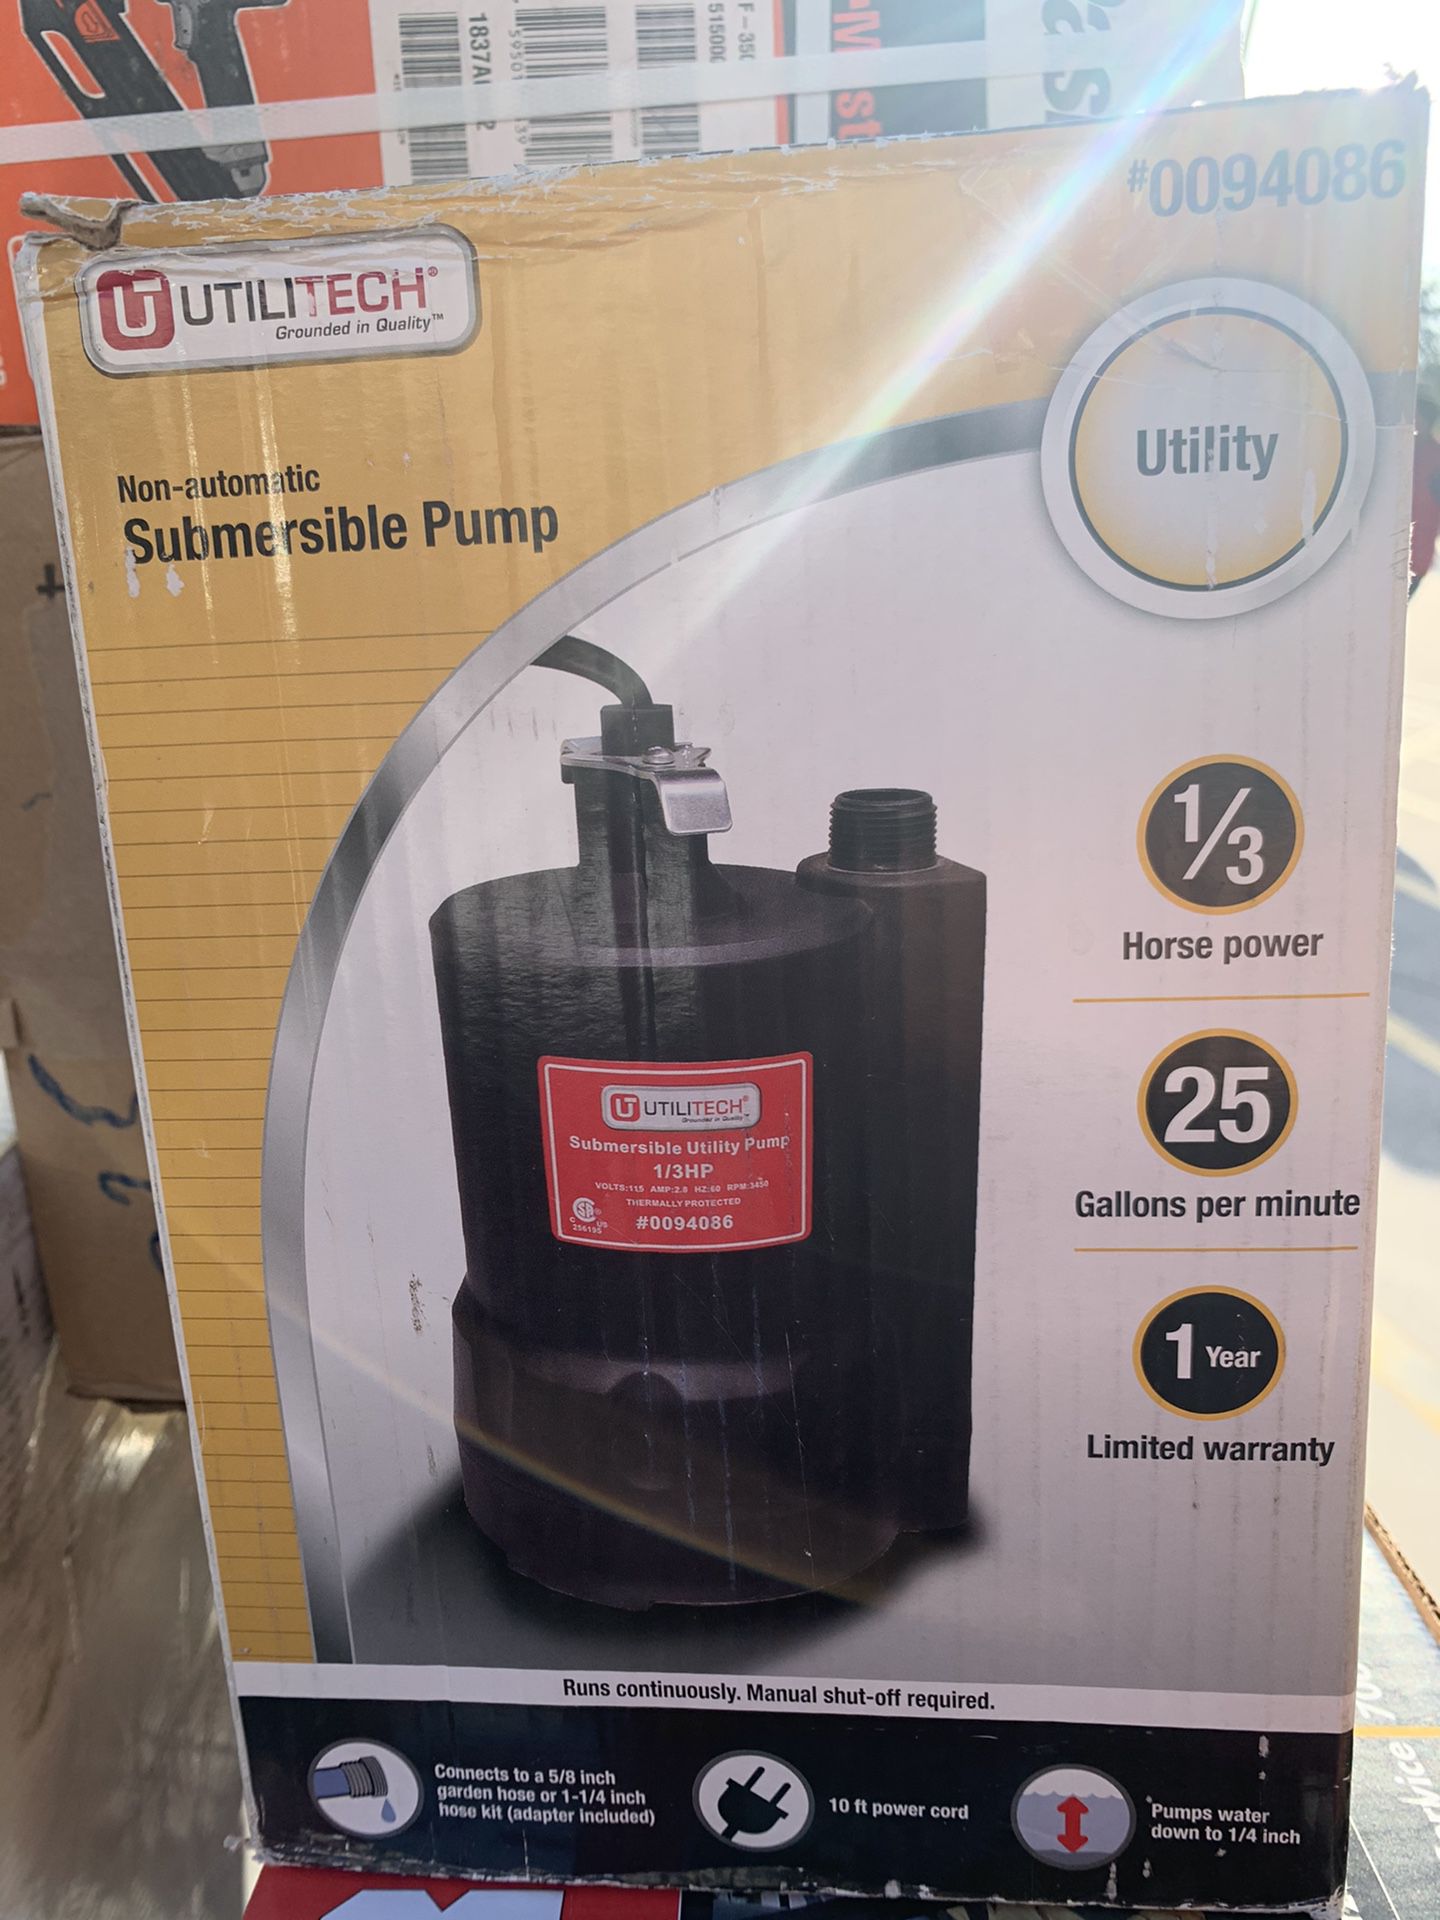 Utilitech 1/3 submersible pump